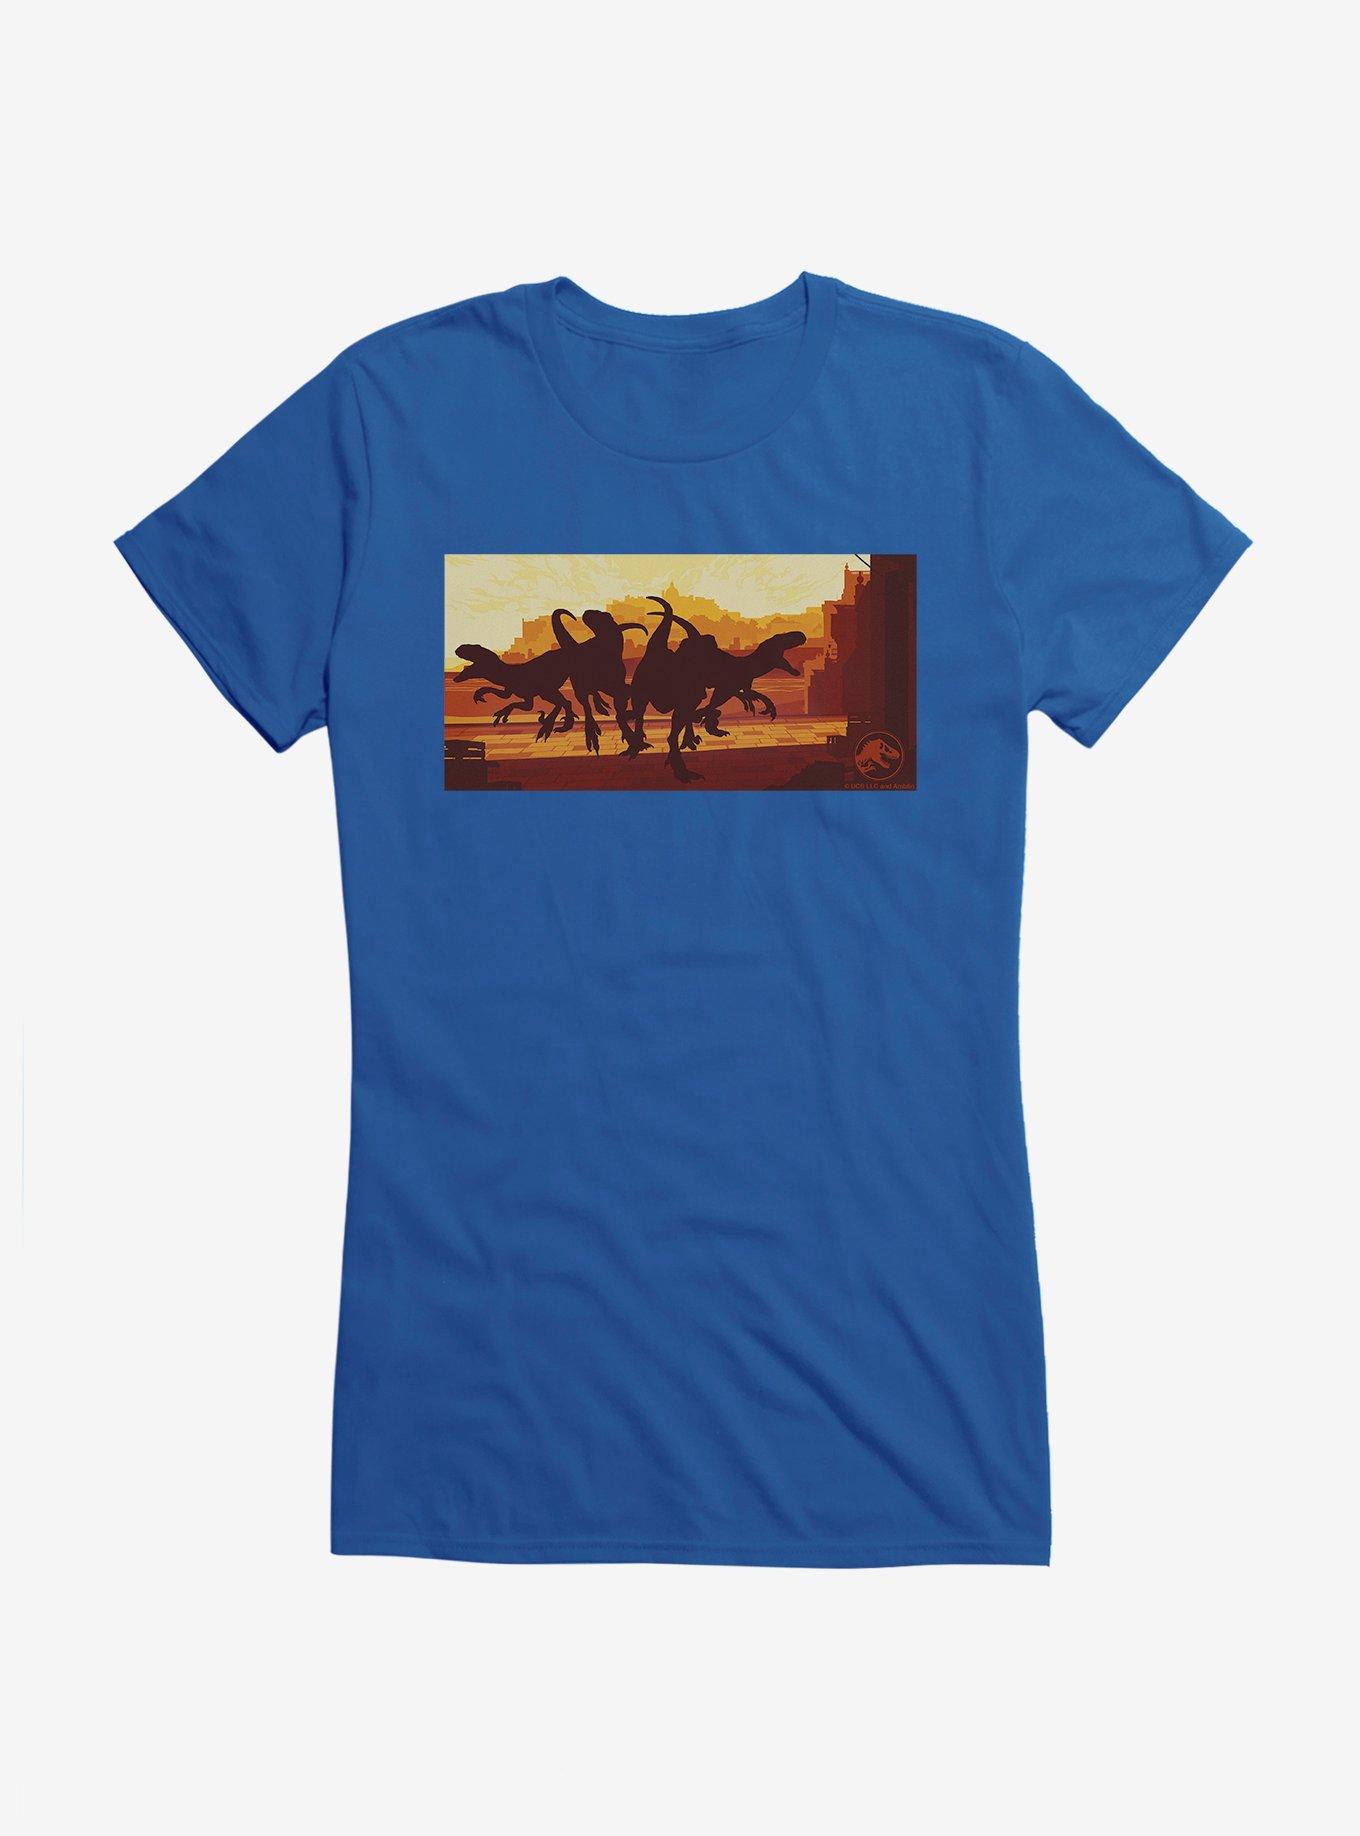 Jurassic World Dominion Swarm Girls T-Shirt